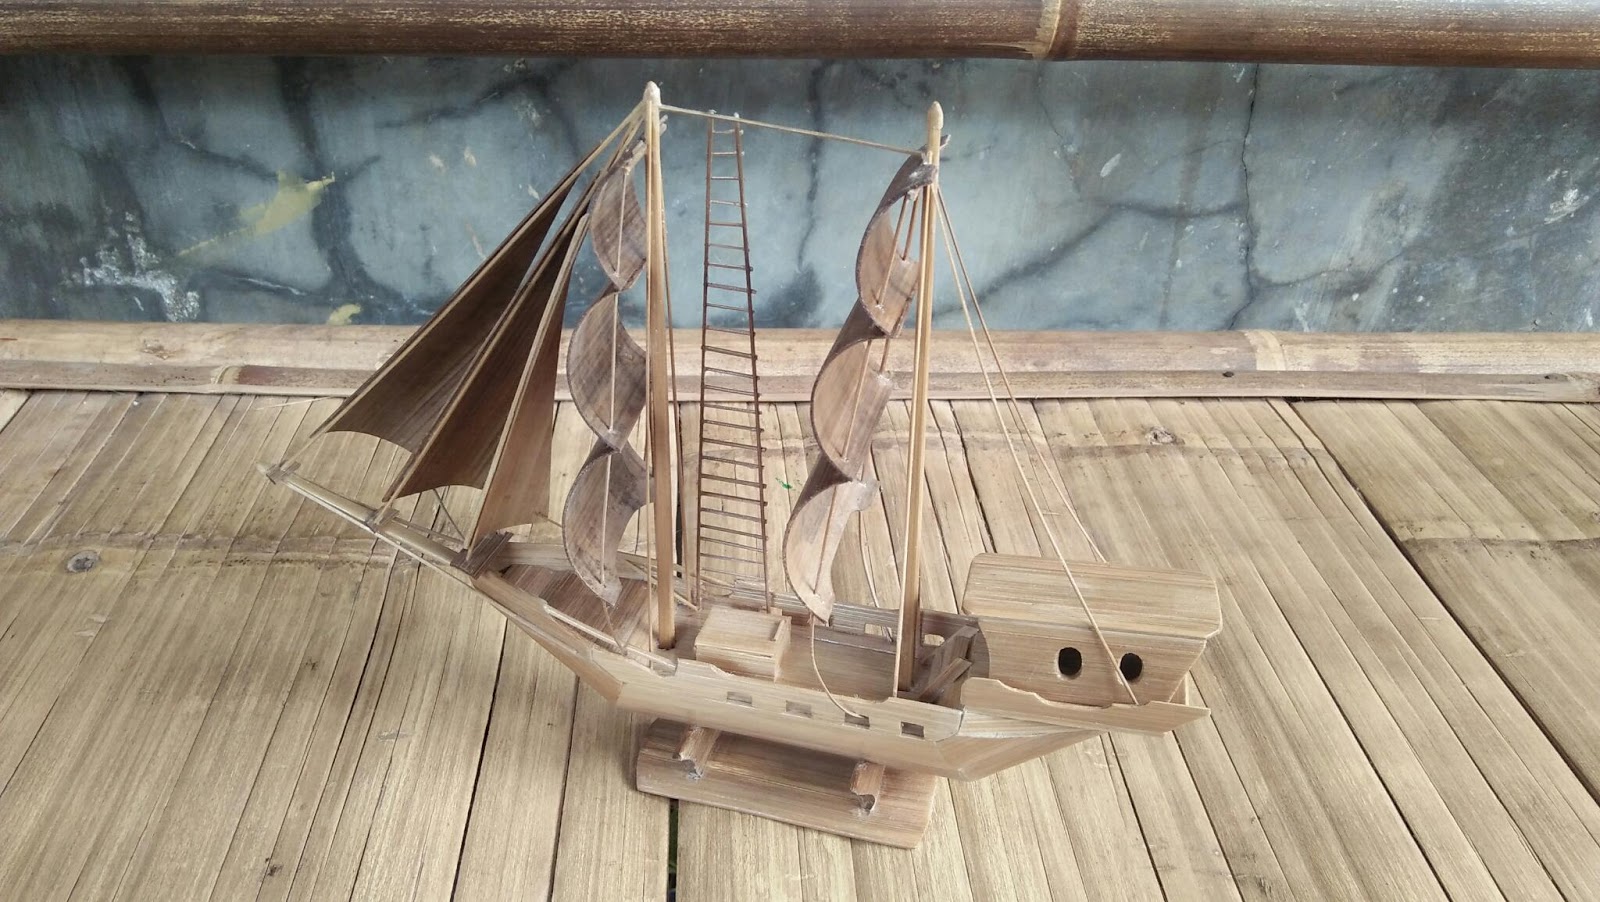 Produk kerajinan  kapal  phinisi dari bambu